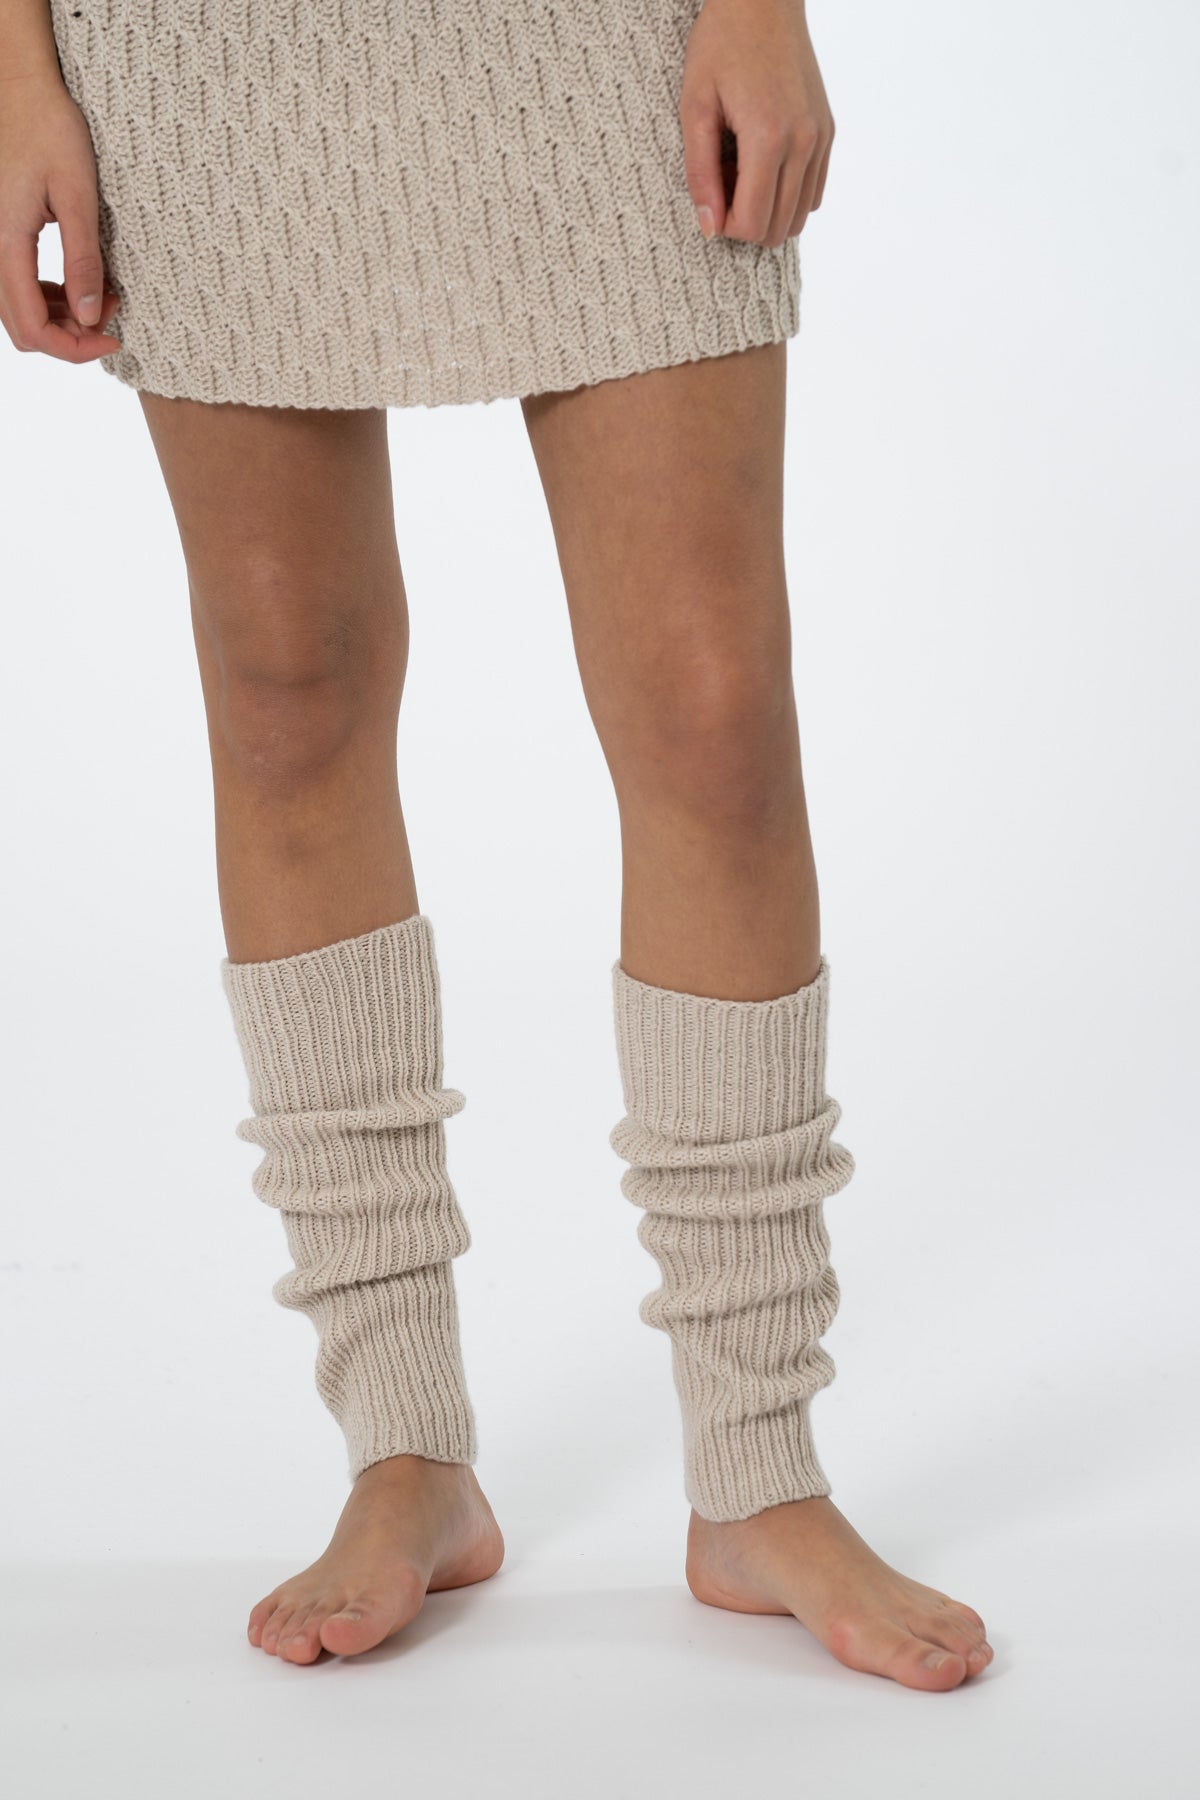 Dinadi Merino Handknit leg warmers in Almond white Fall 23/24 